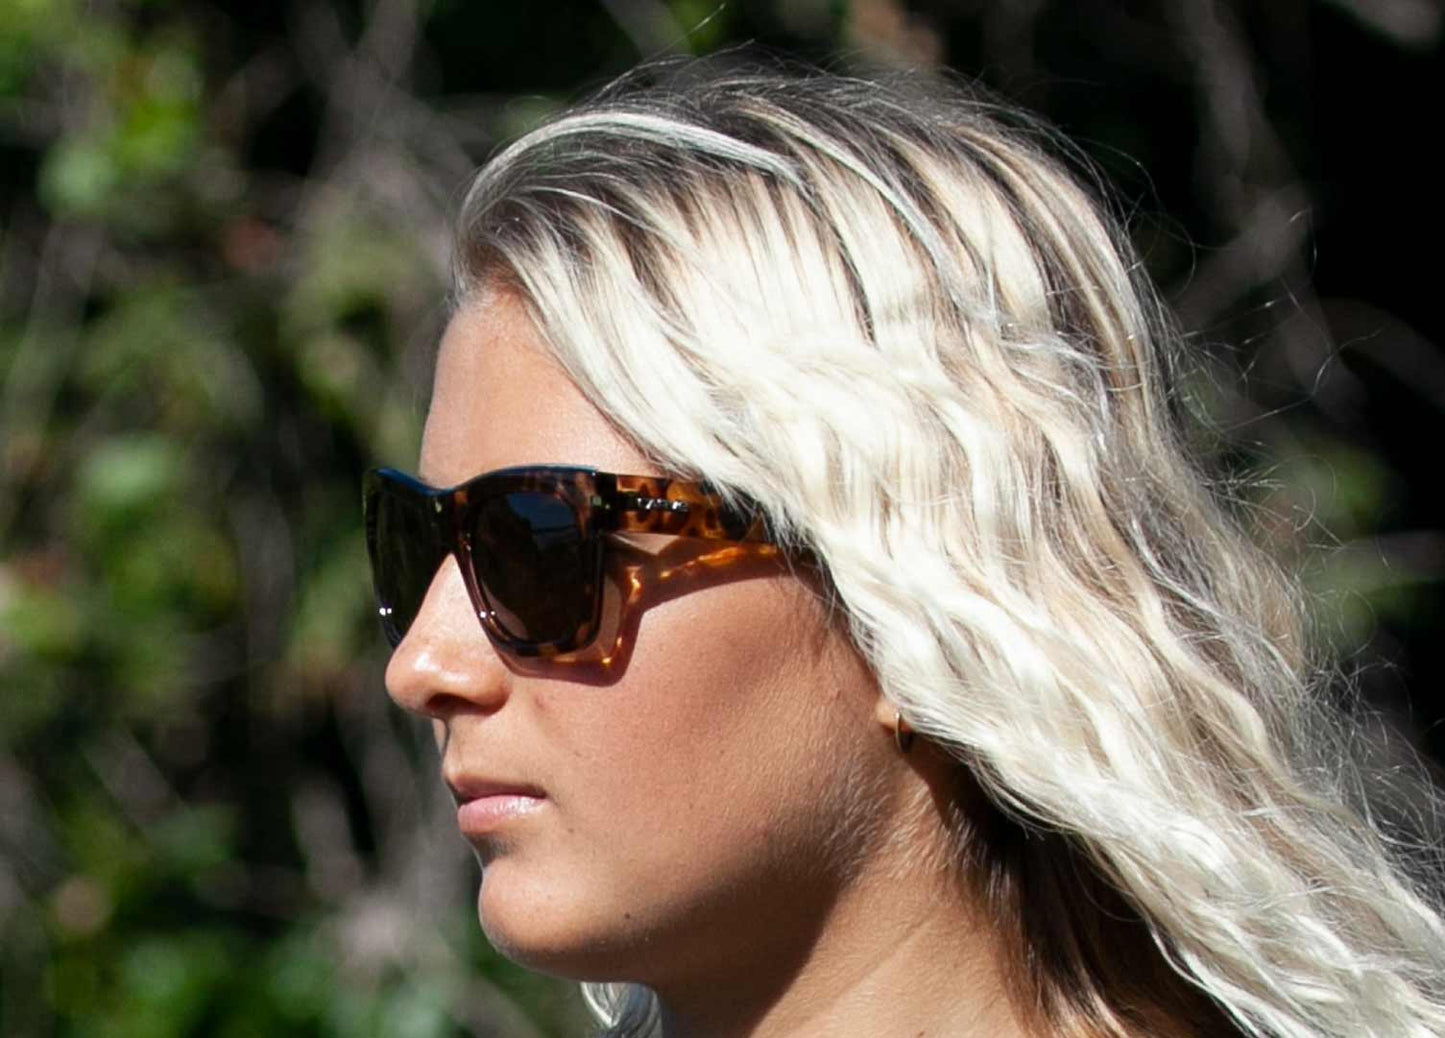 Carta Blanca - Polarized Gloss Tort Frame Sunglasses